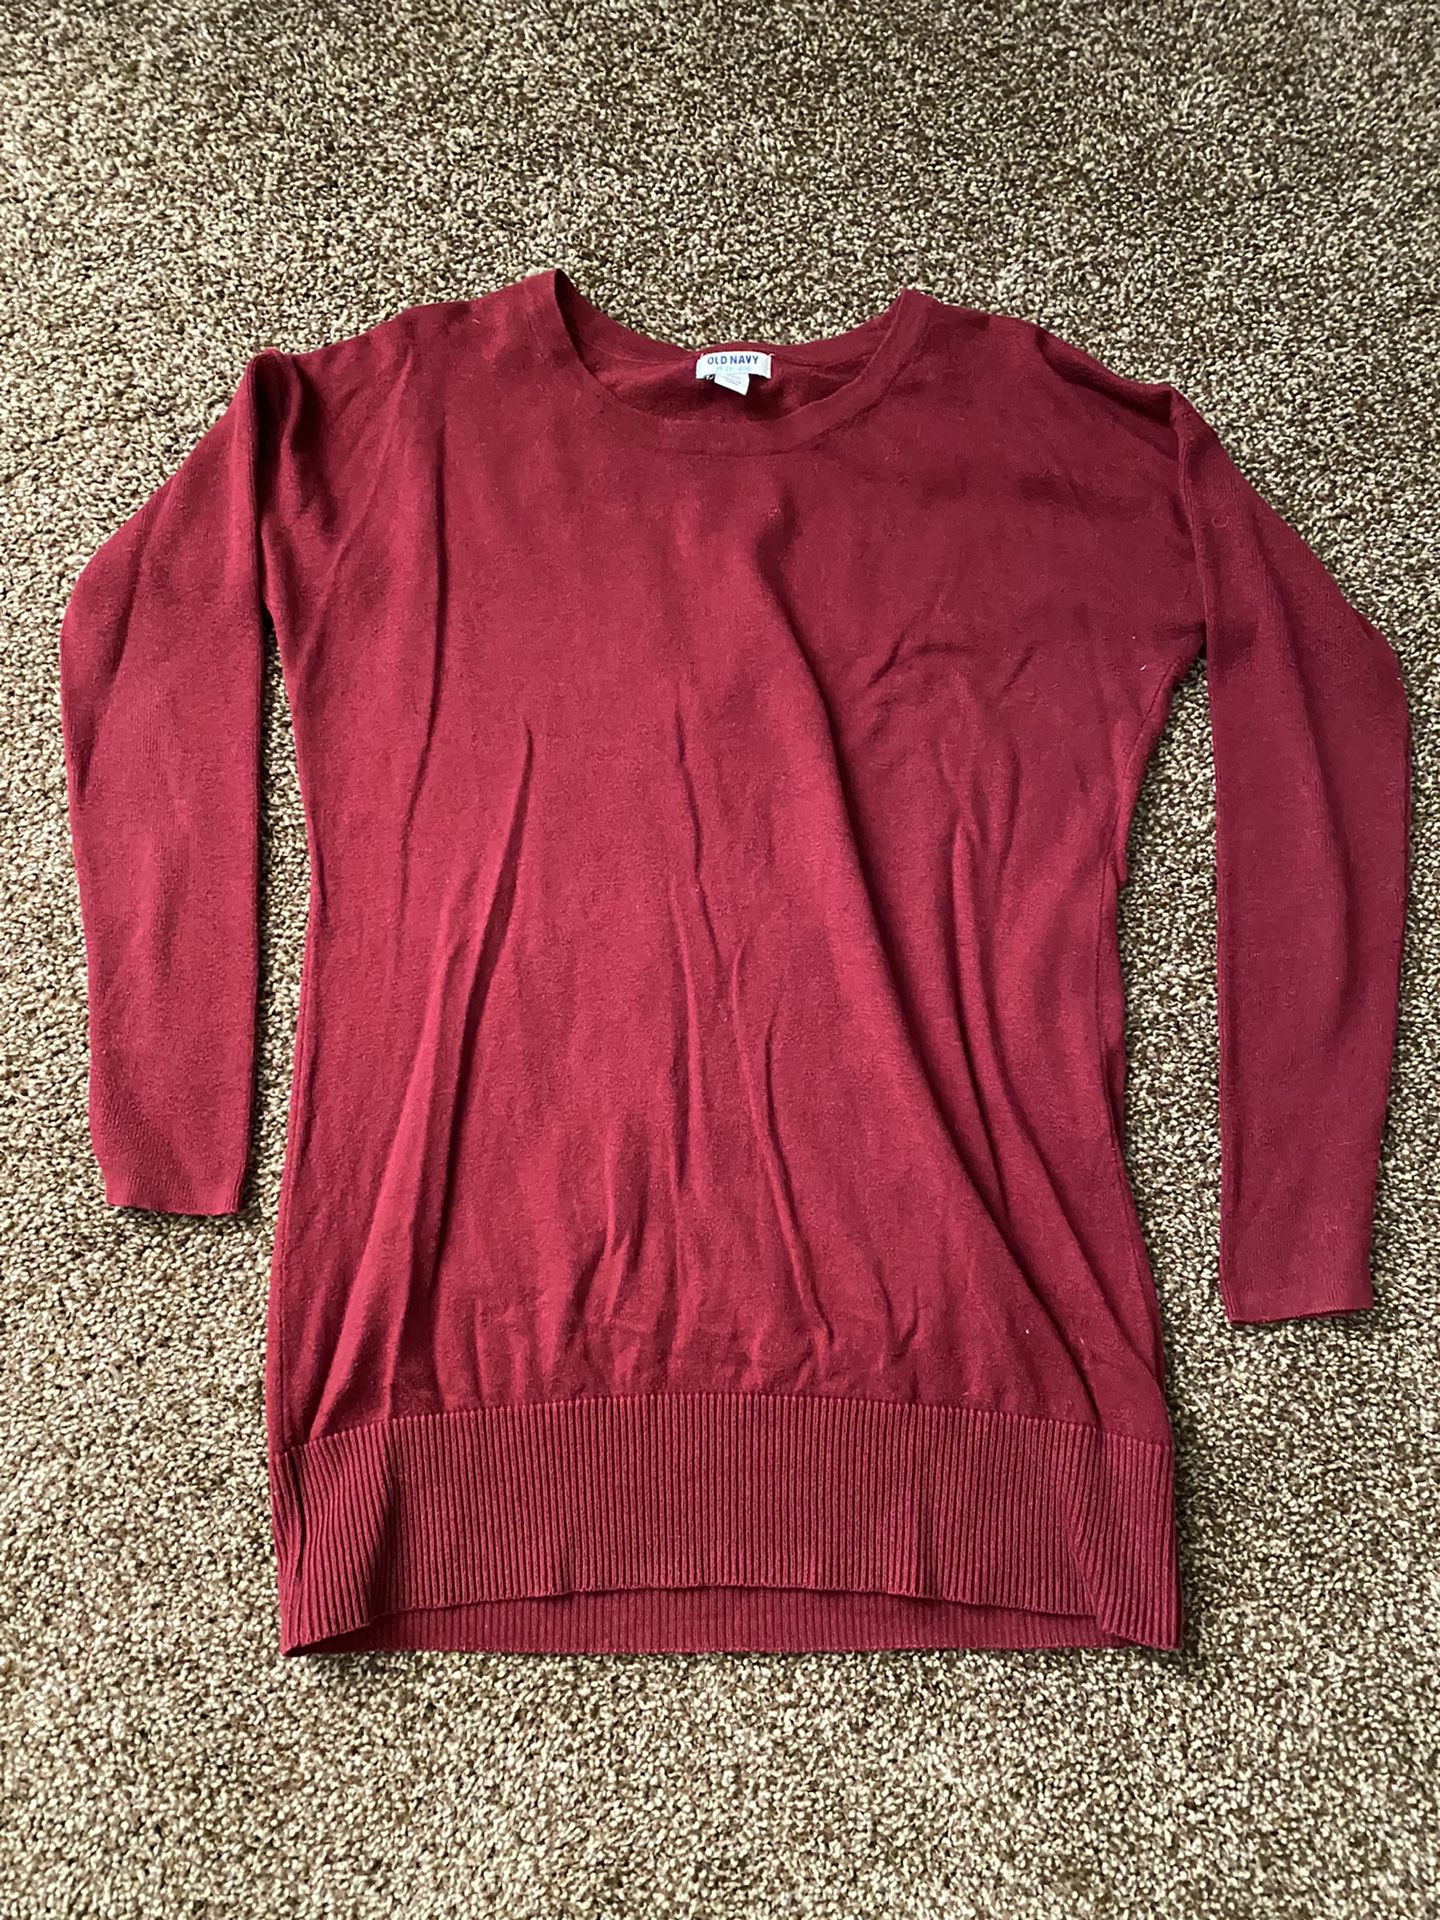 Women’s Old Navy Tunic Sweater 